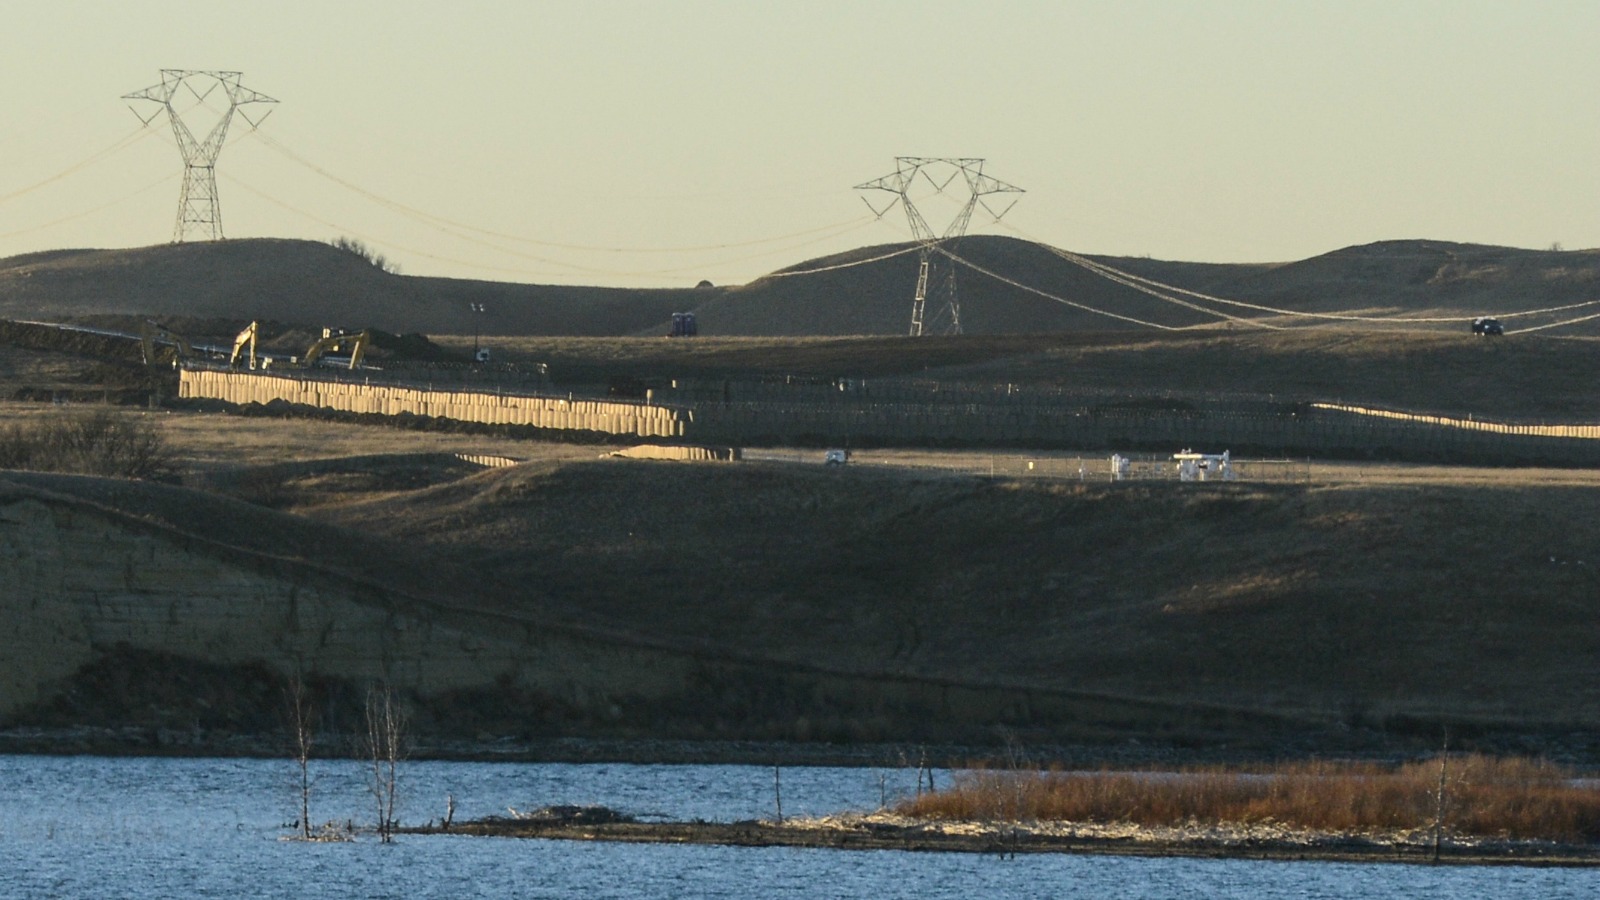 Dakota Access Pipeline equipment is seen at Lake Oahe near Standing Rock.